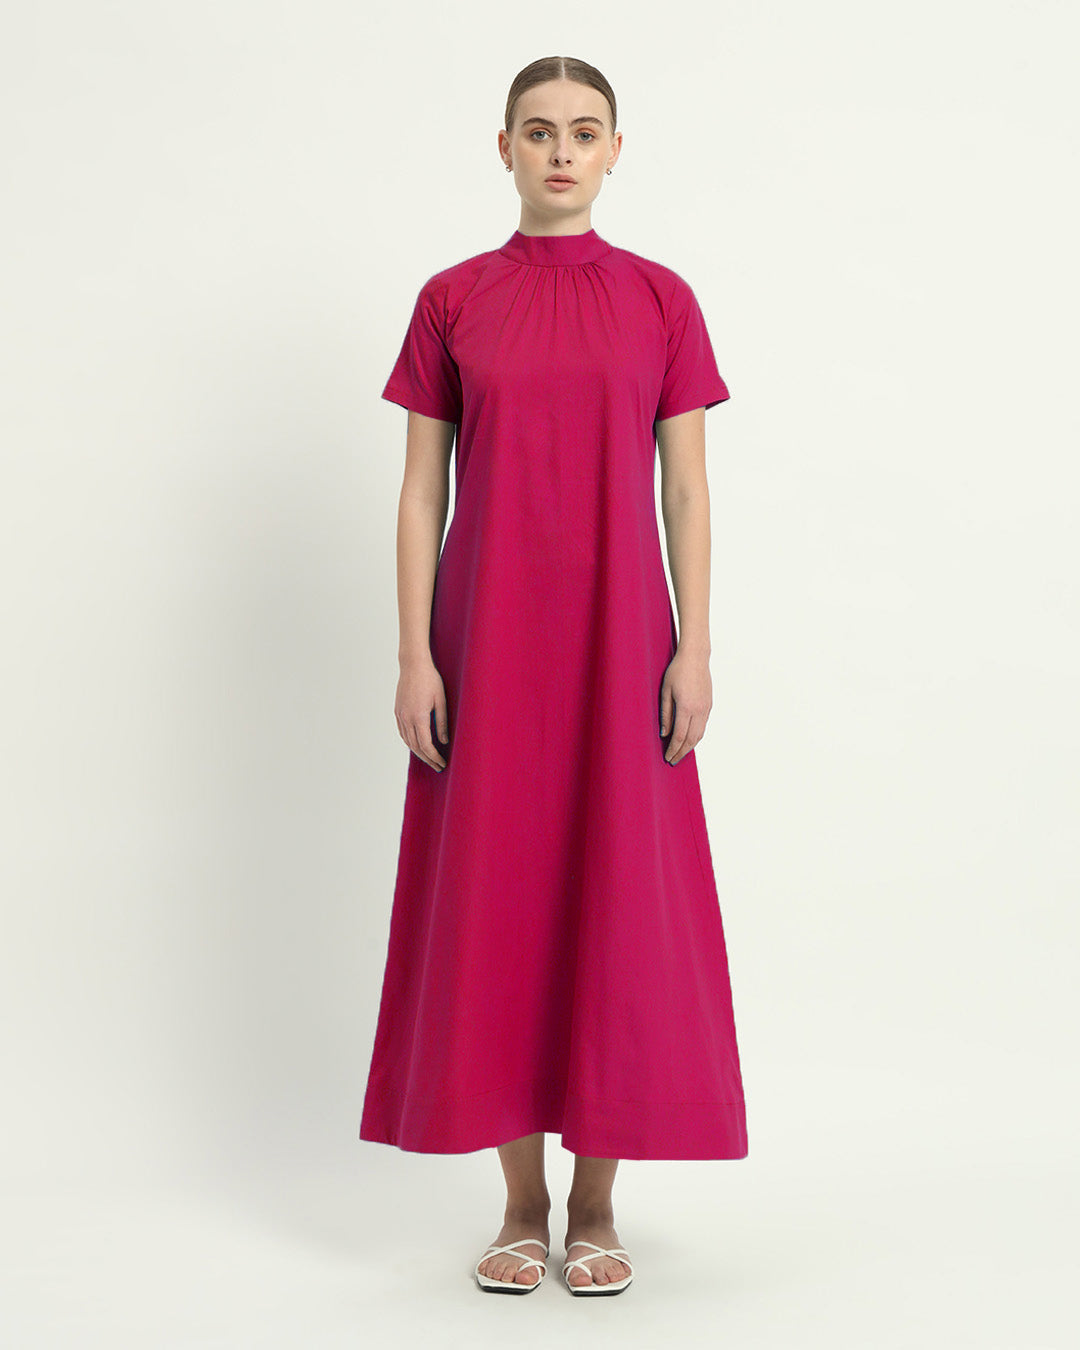 The Hermon Berry Cotton Dress